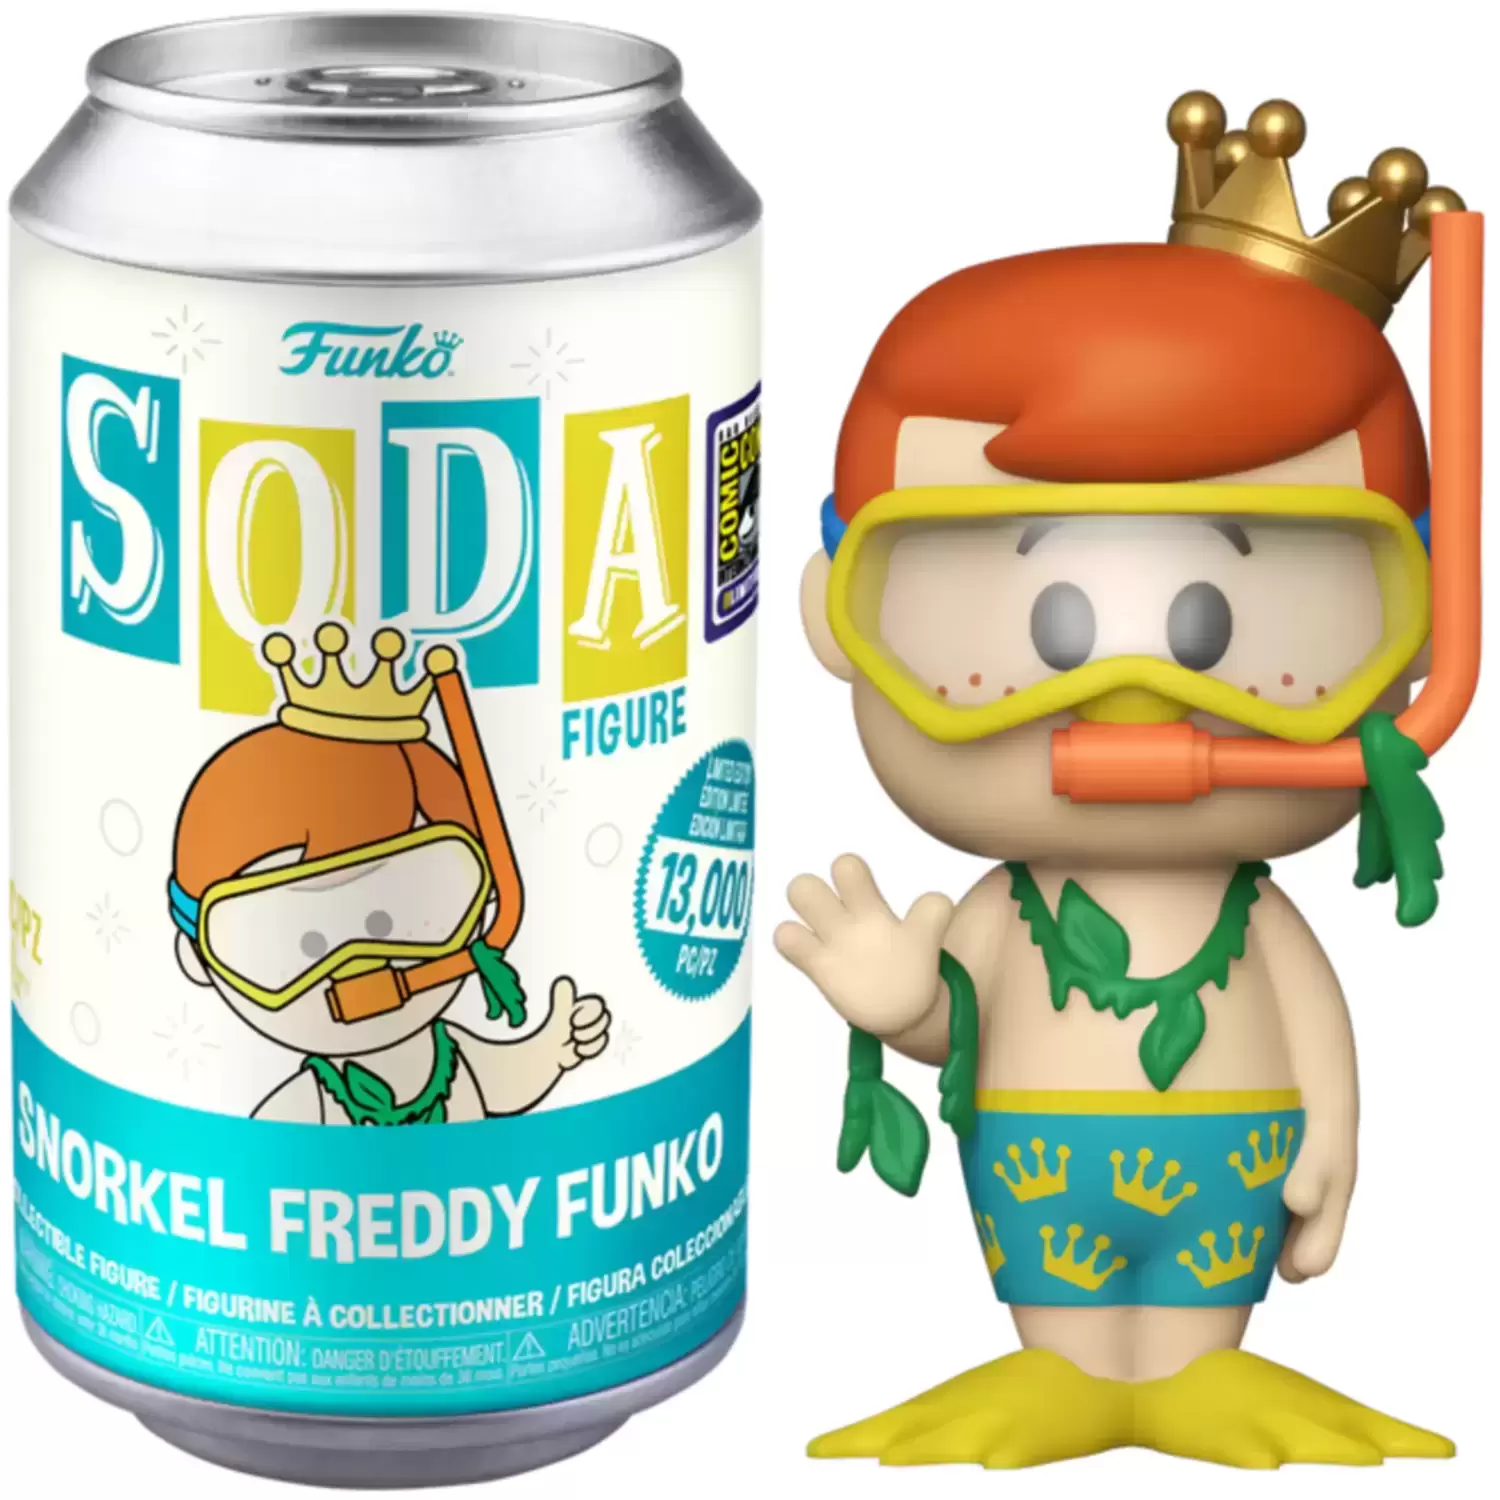 Vinyl Soda! - Funko - Snorkel Freddy Funko